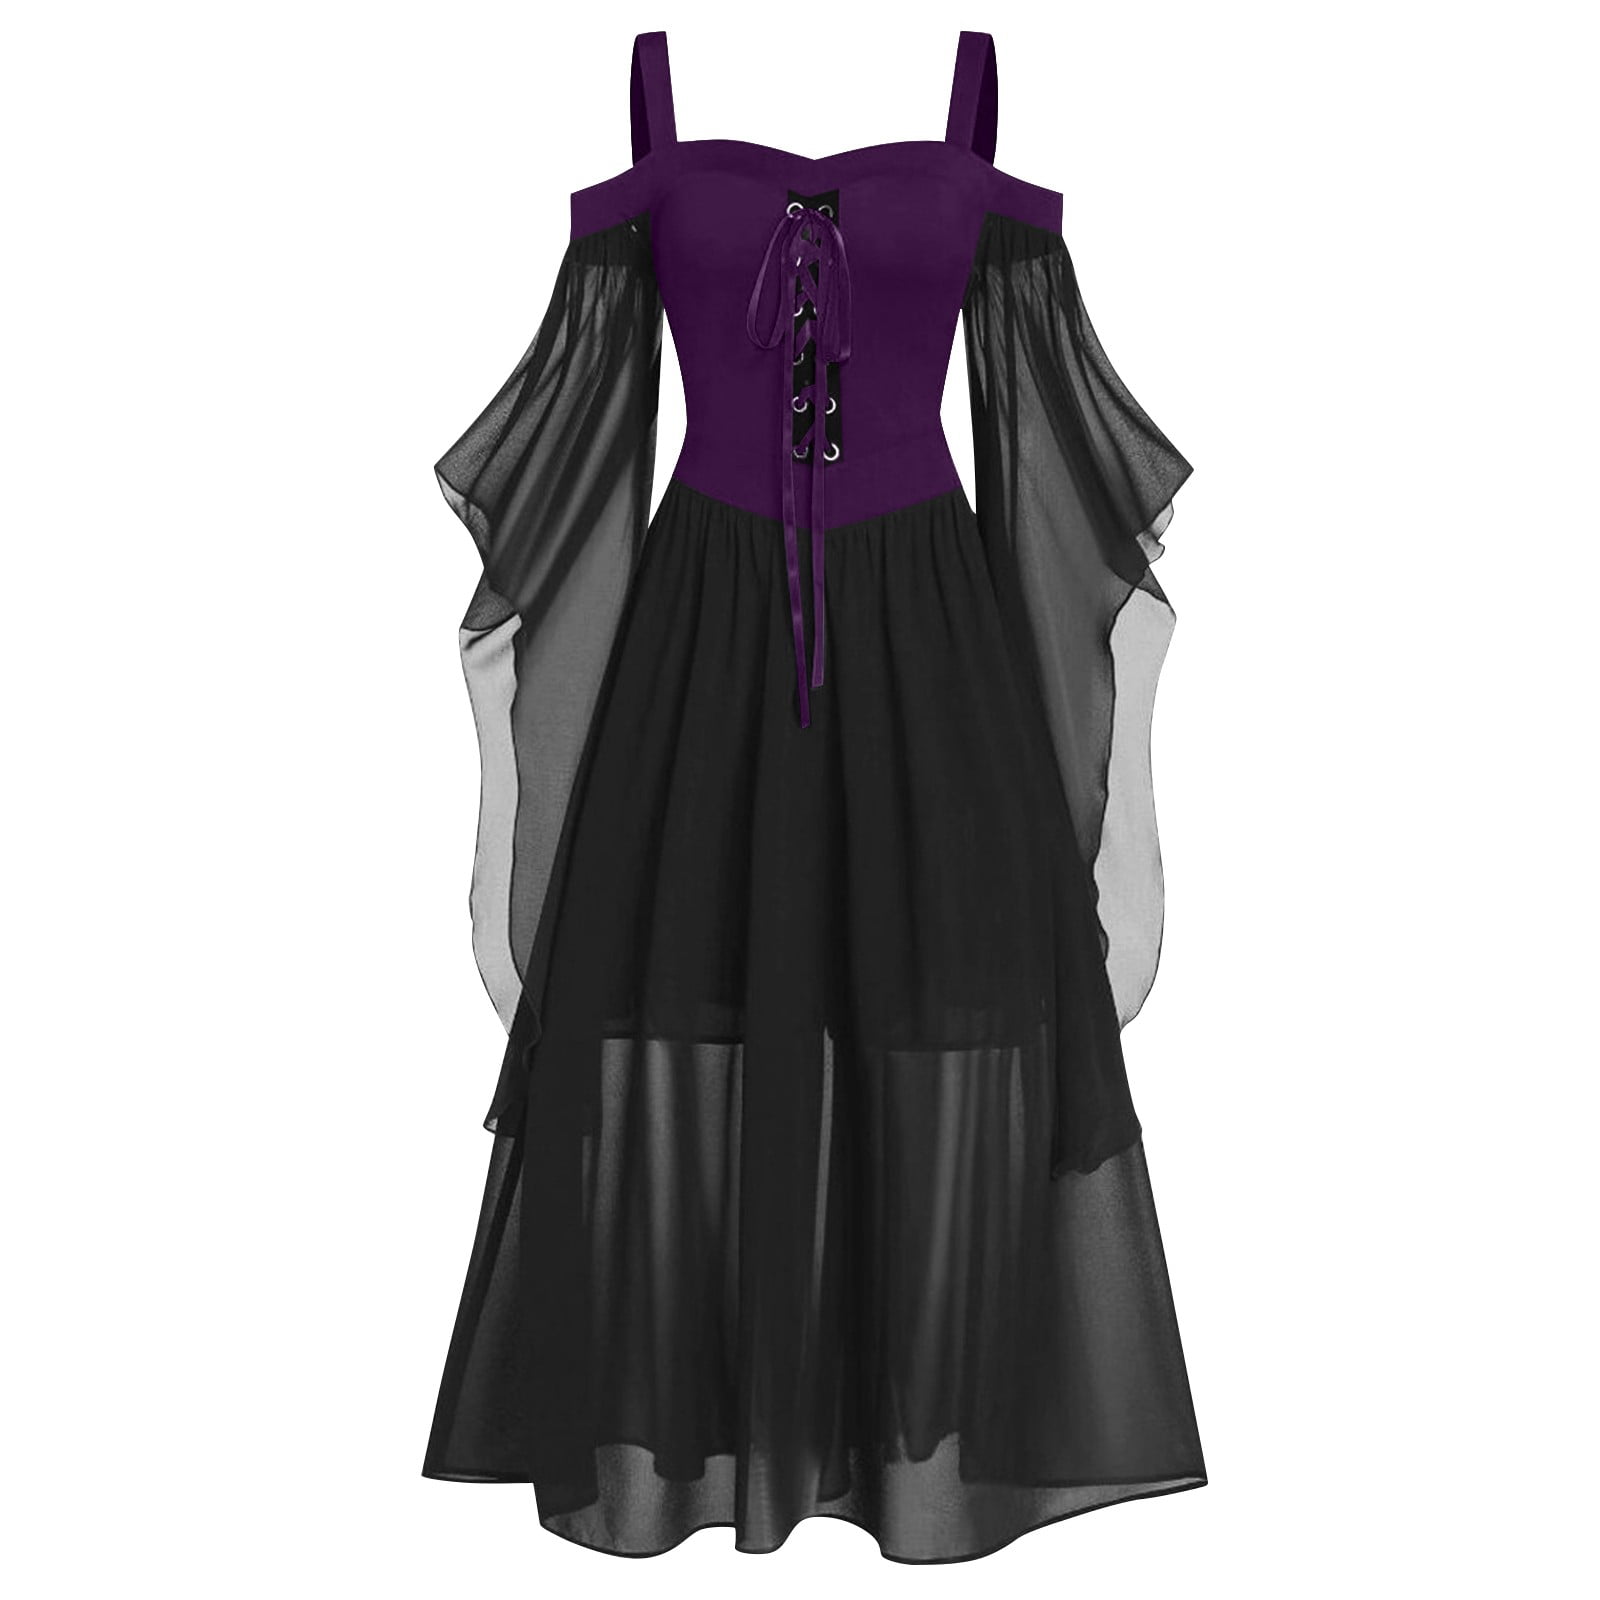 SXAURA Women's Plus Size Mesh Strap Off-Shoulder Maxi Dress | Sheer ...